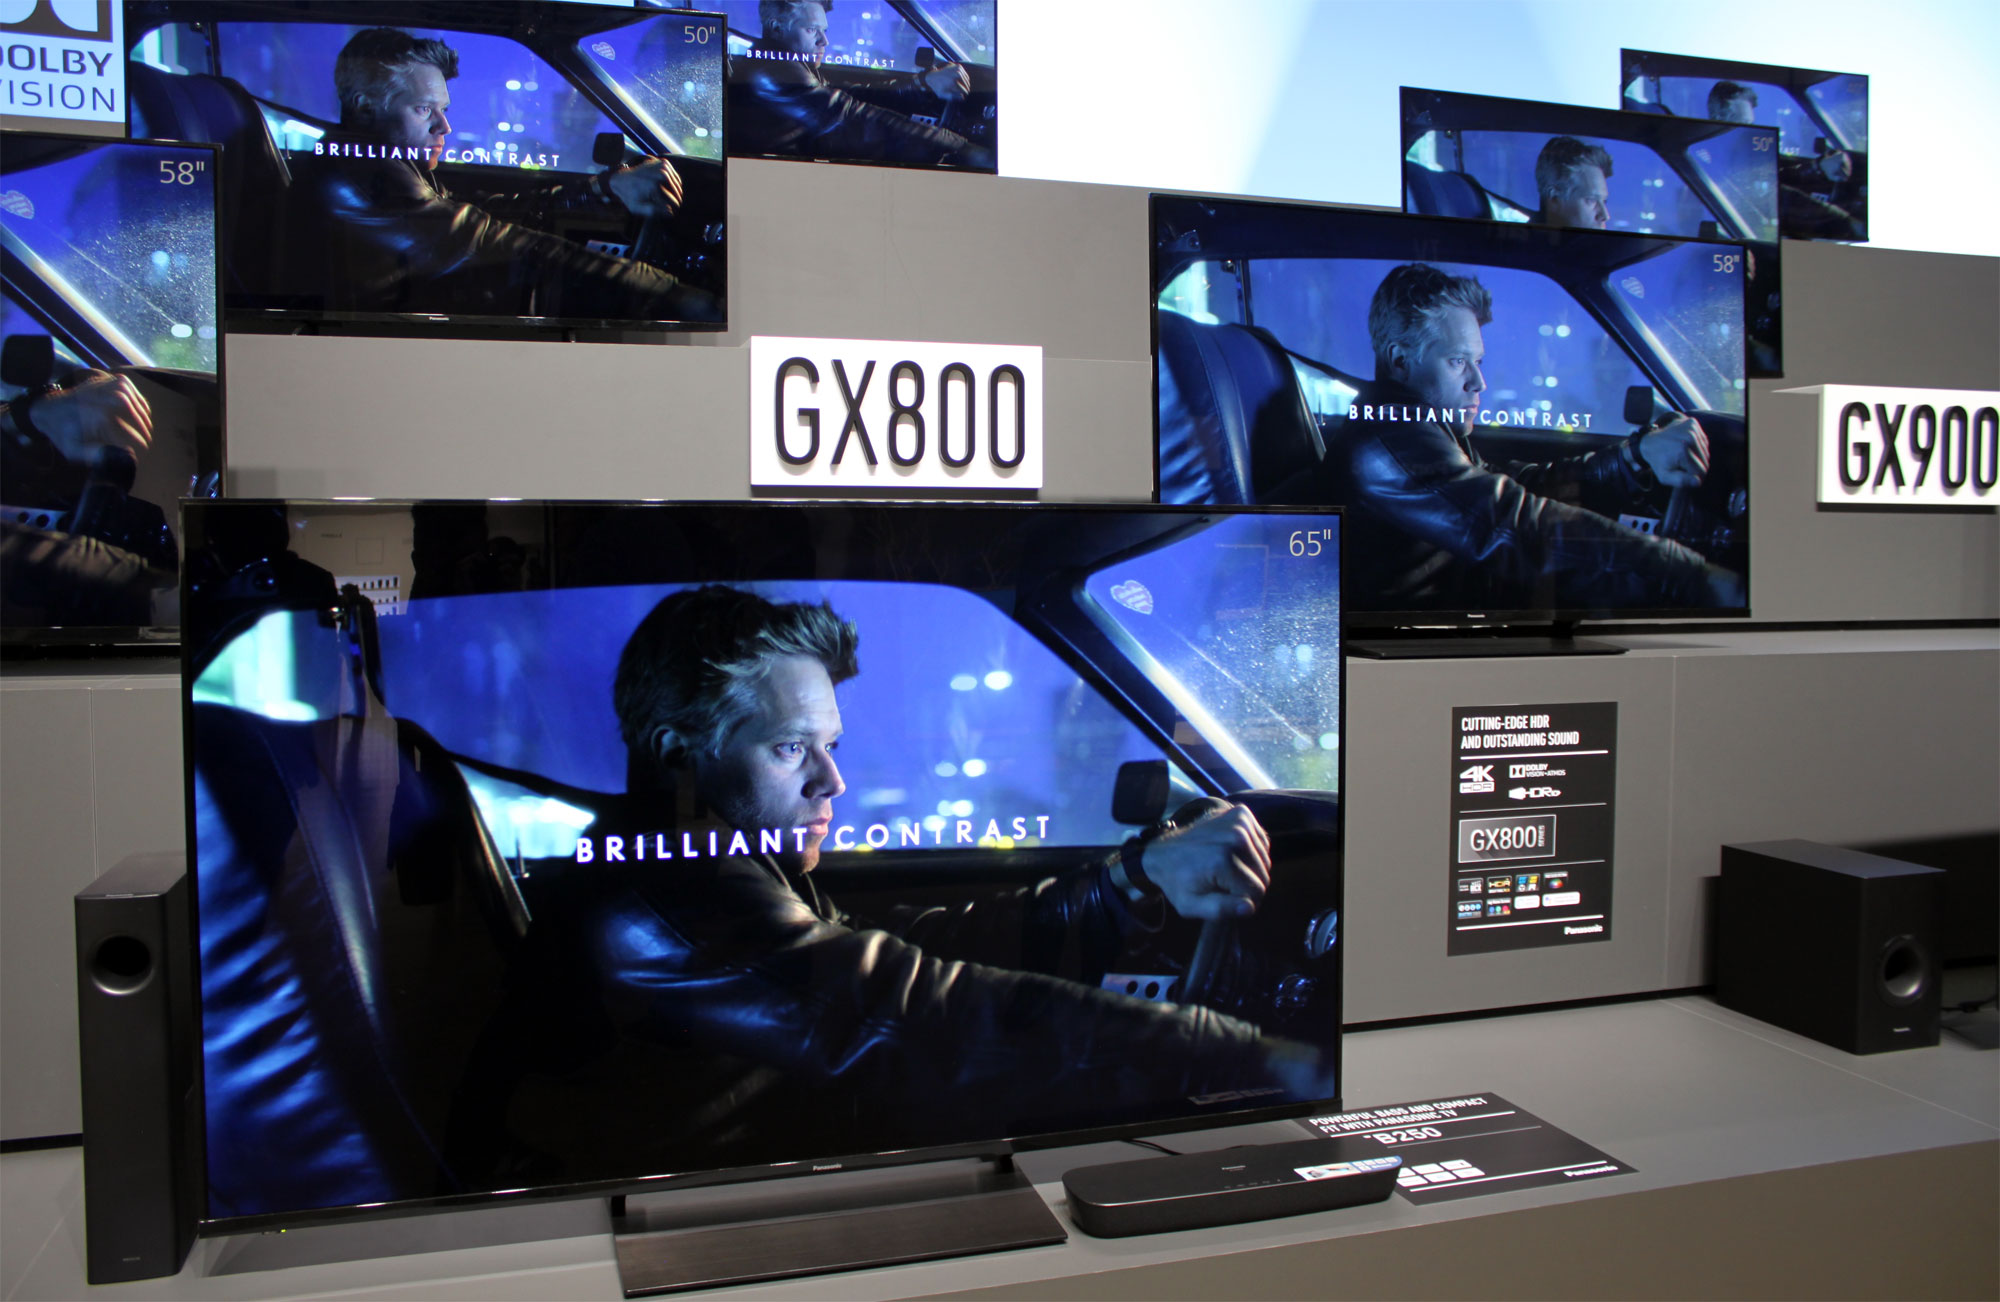 panasonic gx800 led tv